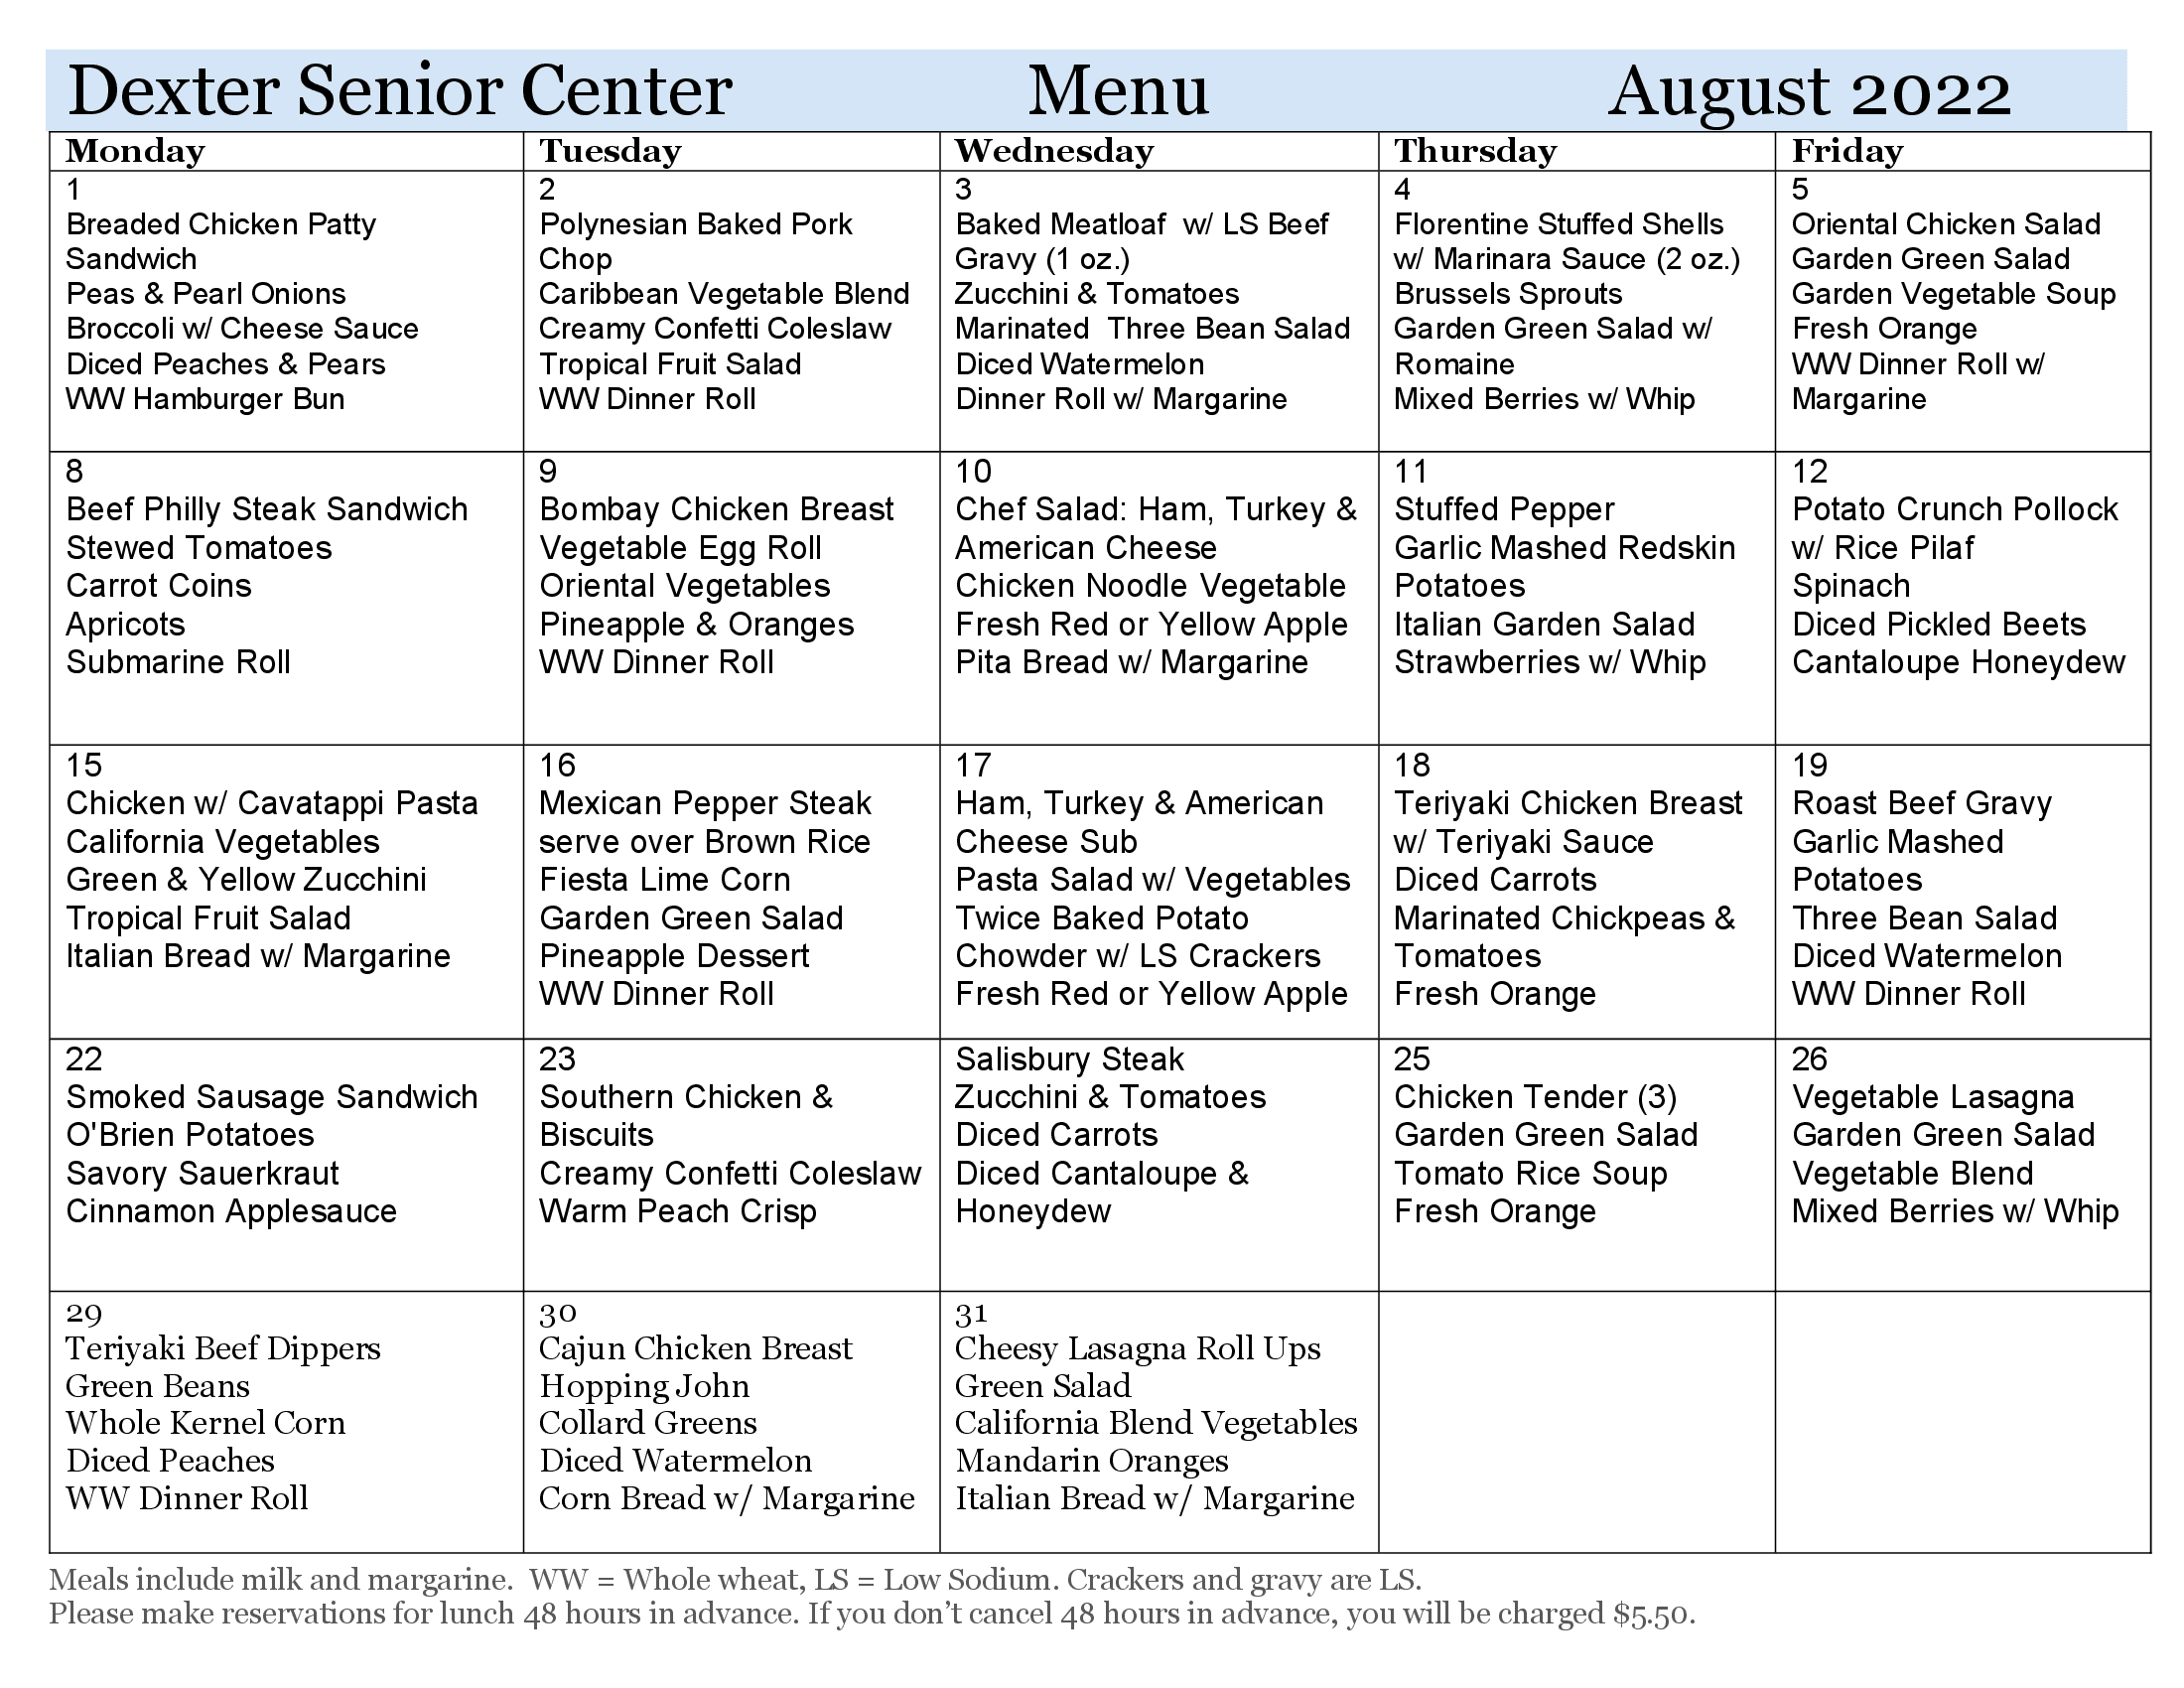 Meals on Wheels - Dexter Senior Center